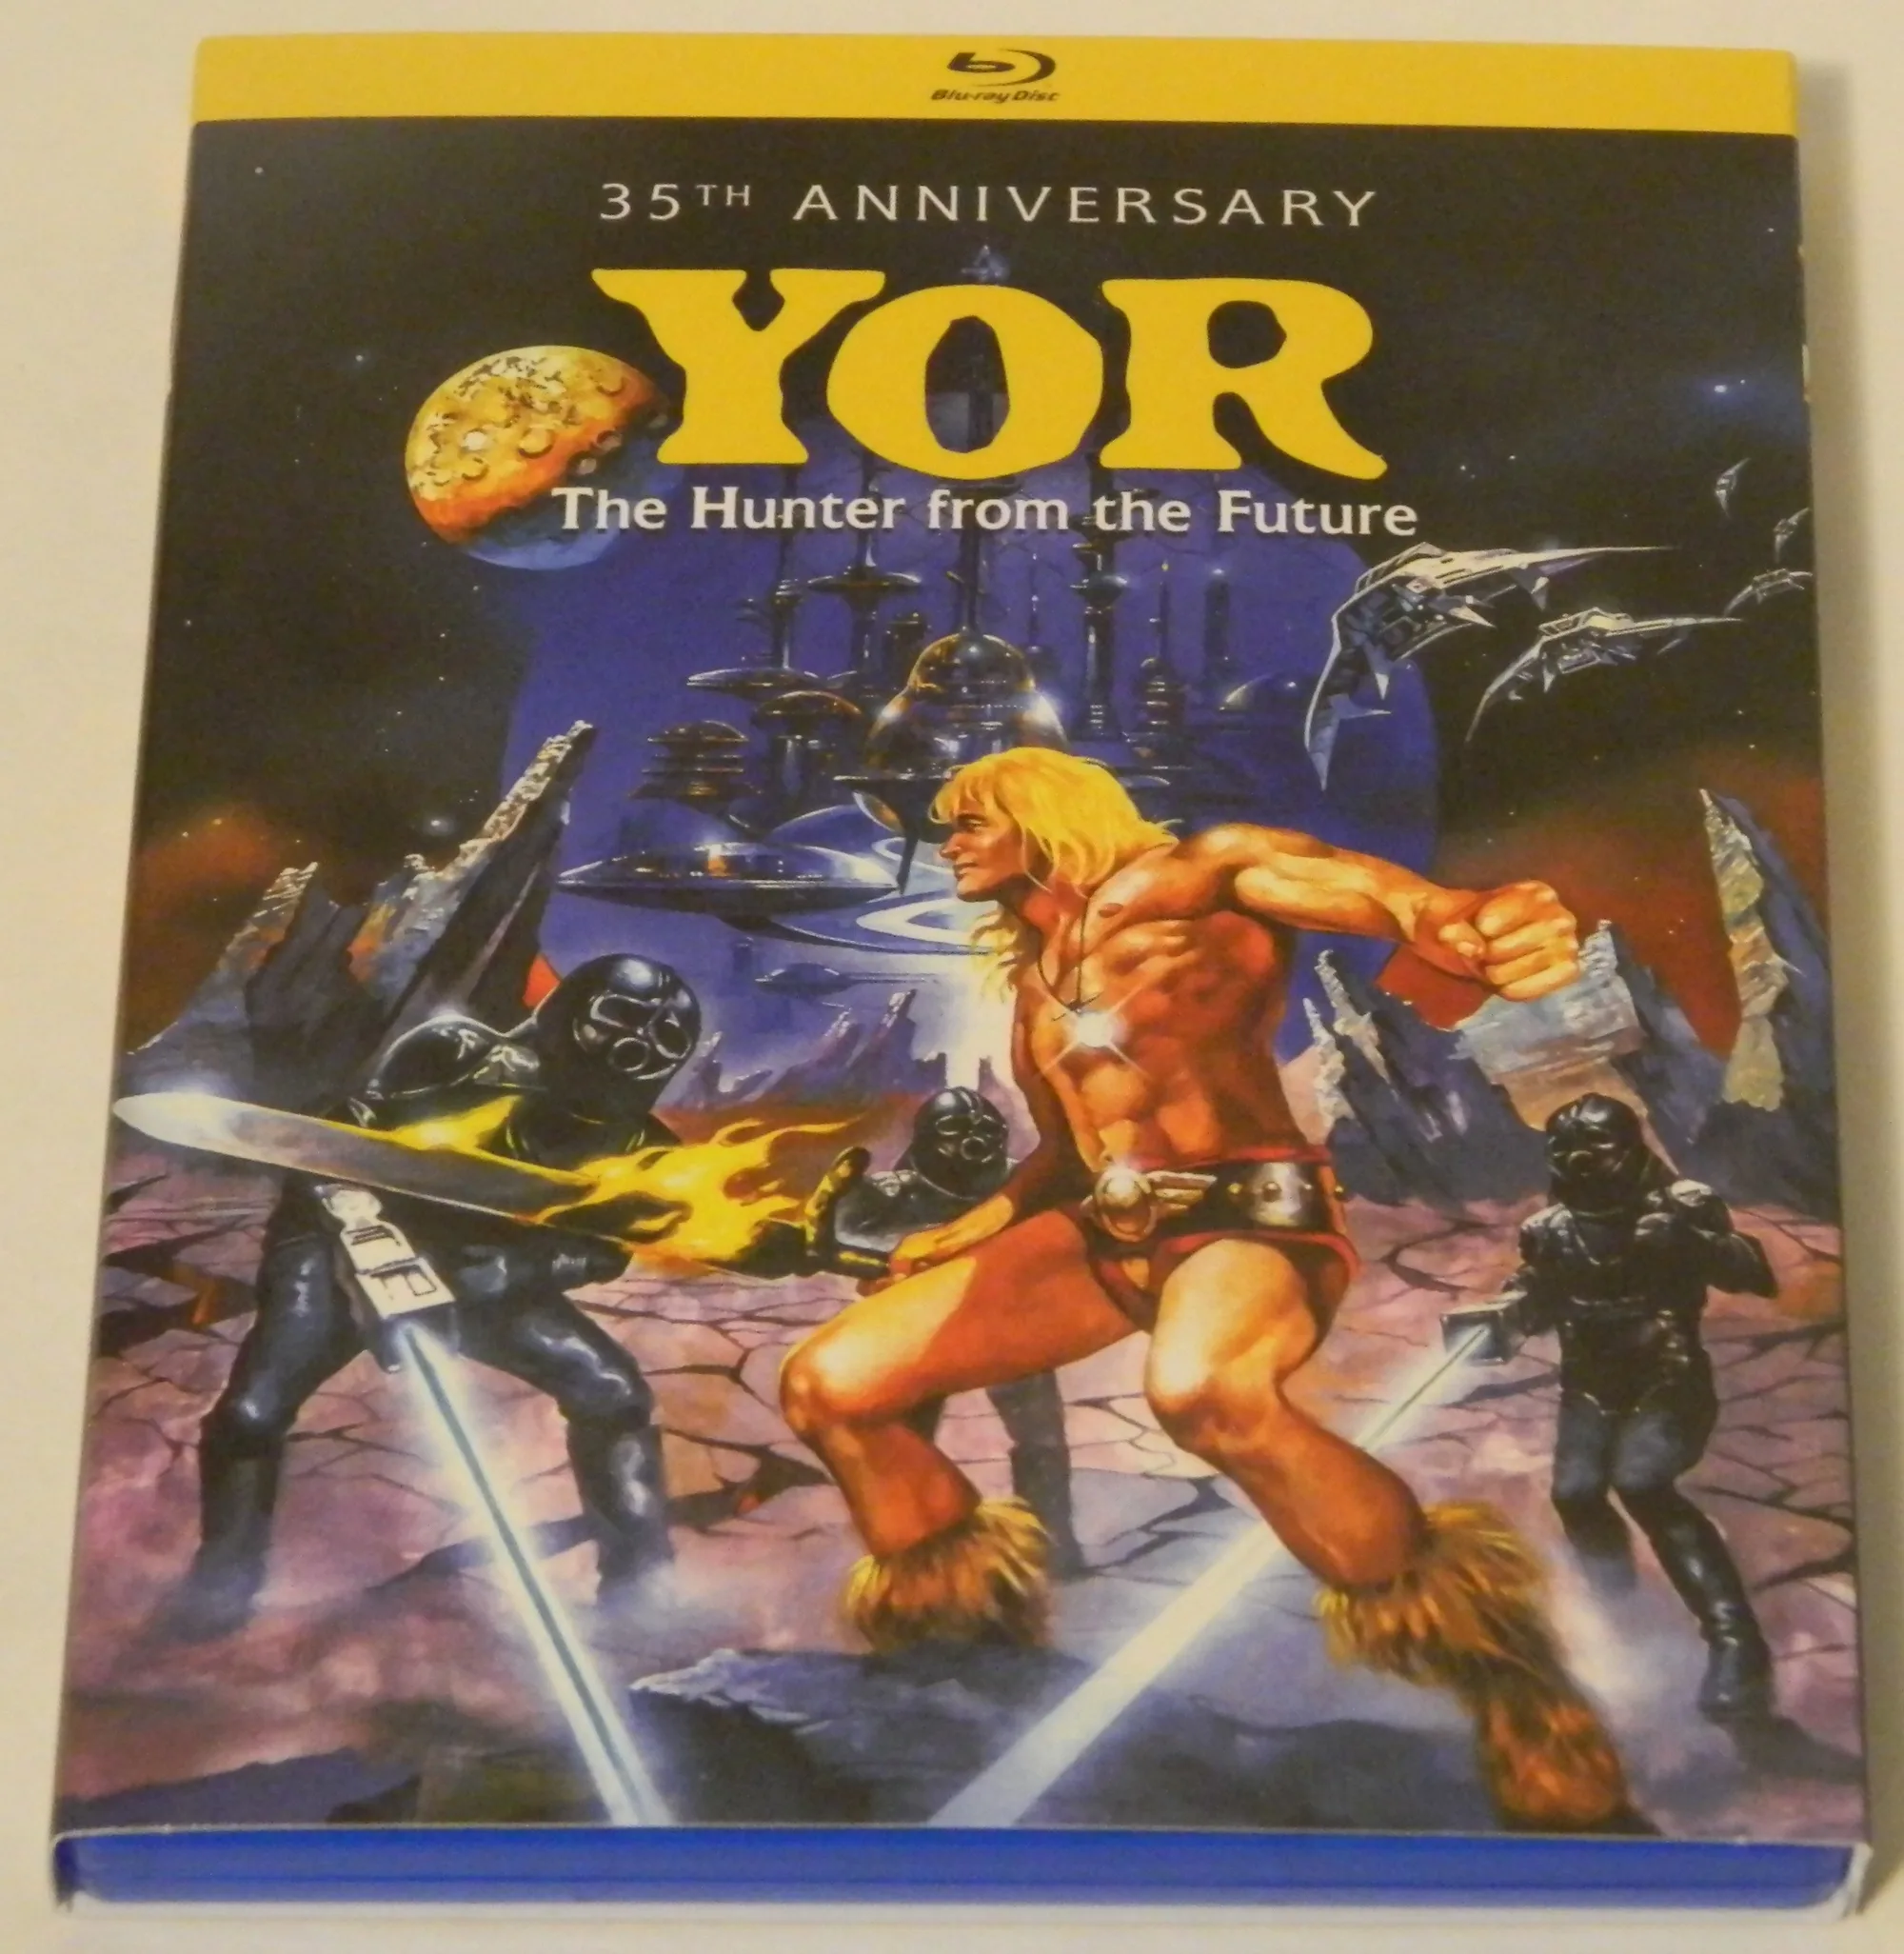 Yor, the Hunter From the Future Blu-ray